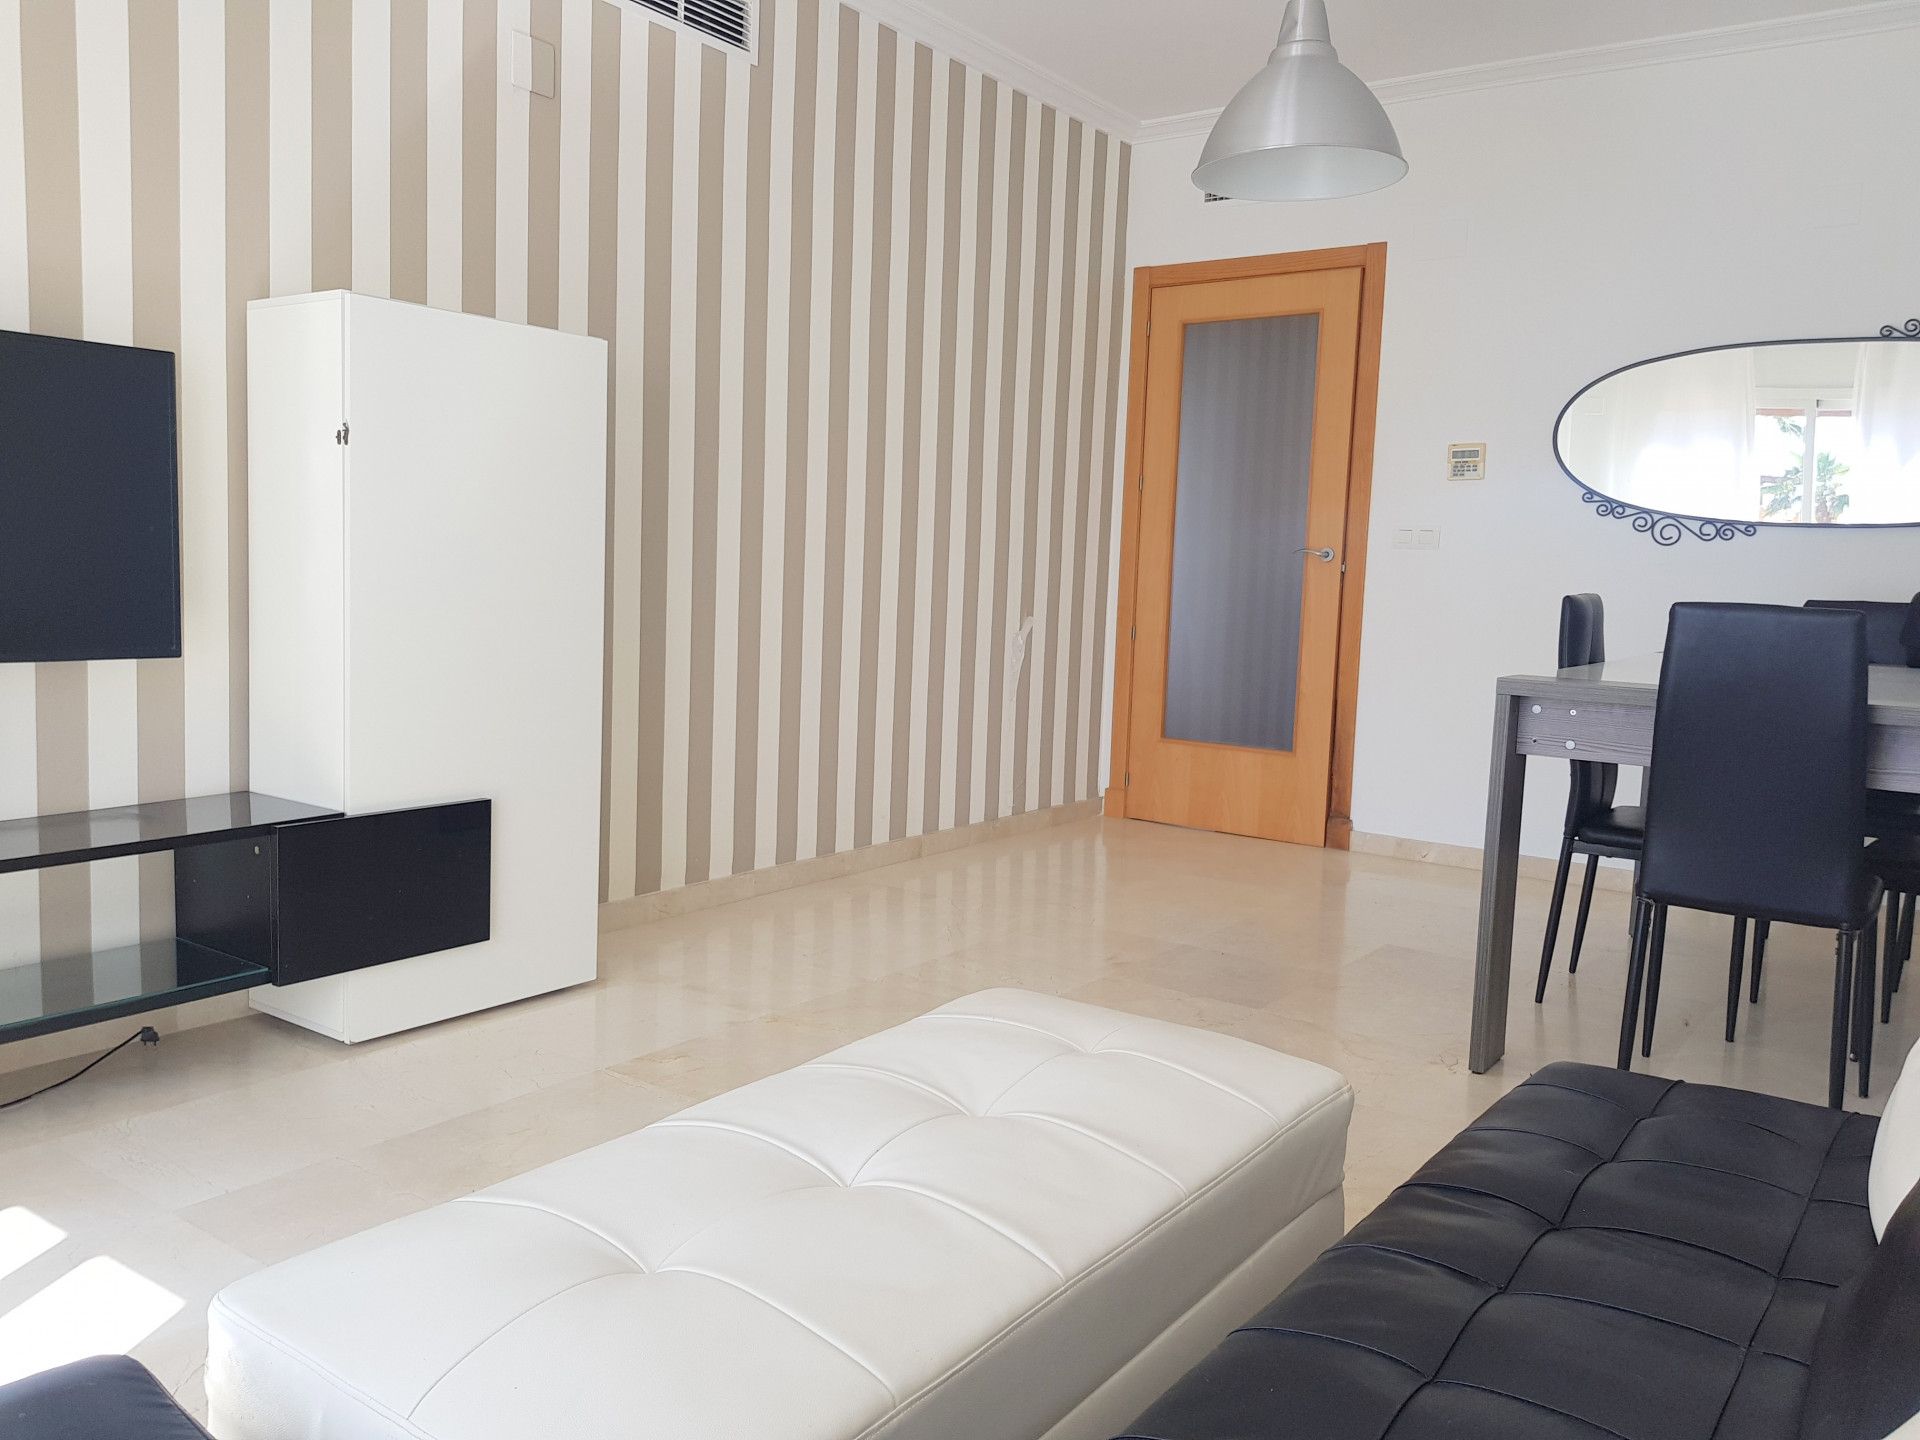 2 bedroom apartment in Casares Costa